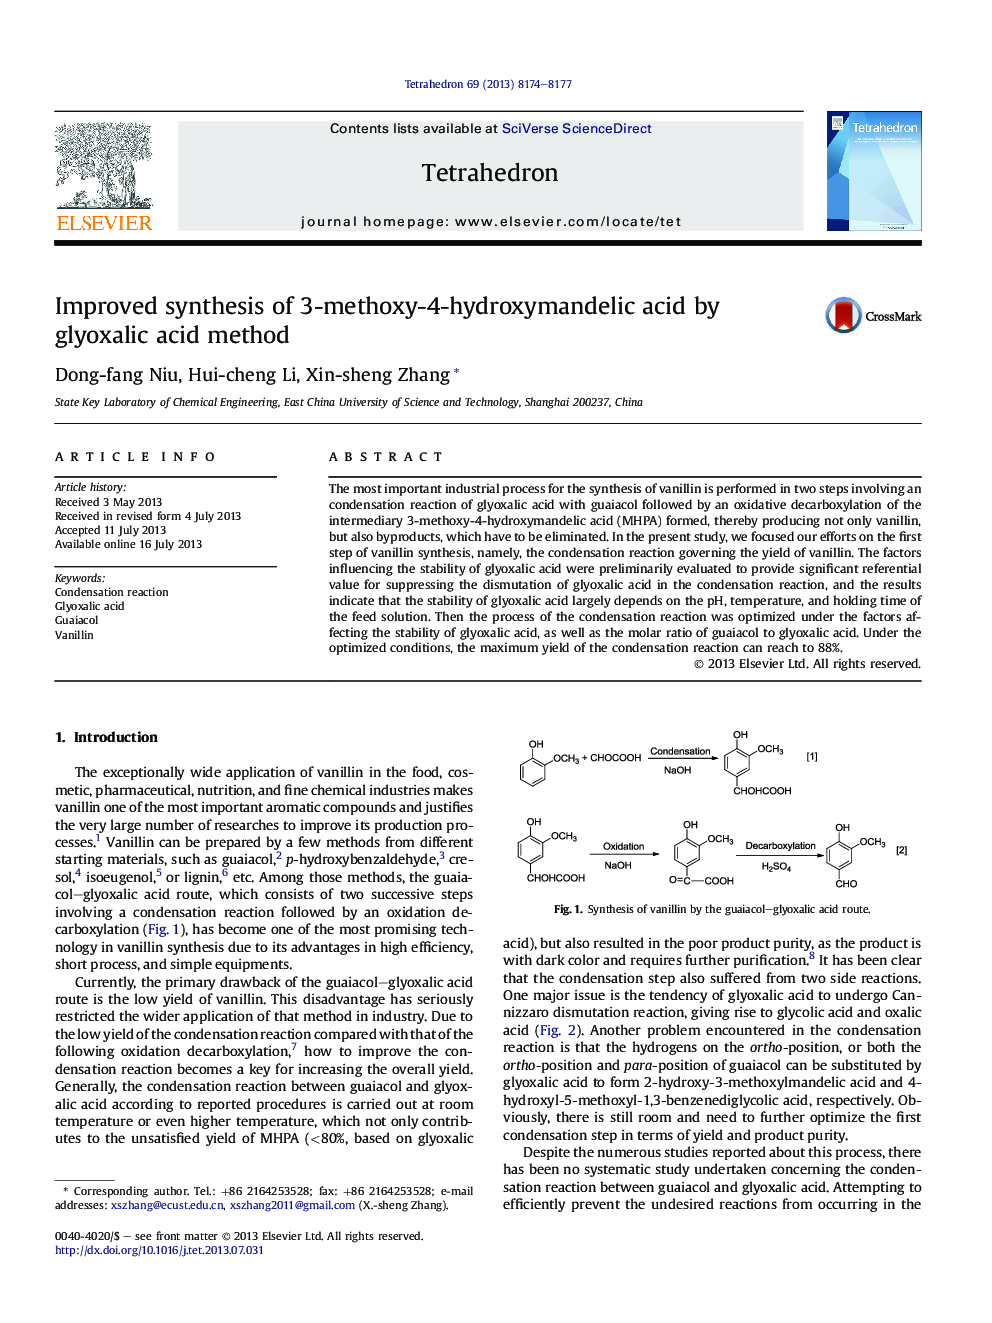 Improved synthesis of 3-methoxy-4-hydroxymandelic acid by glyoxalic acid method